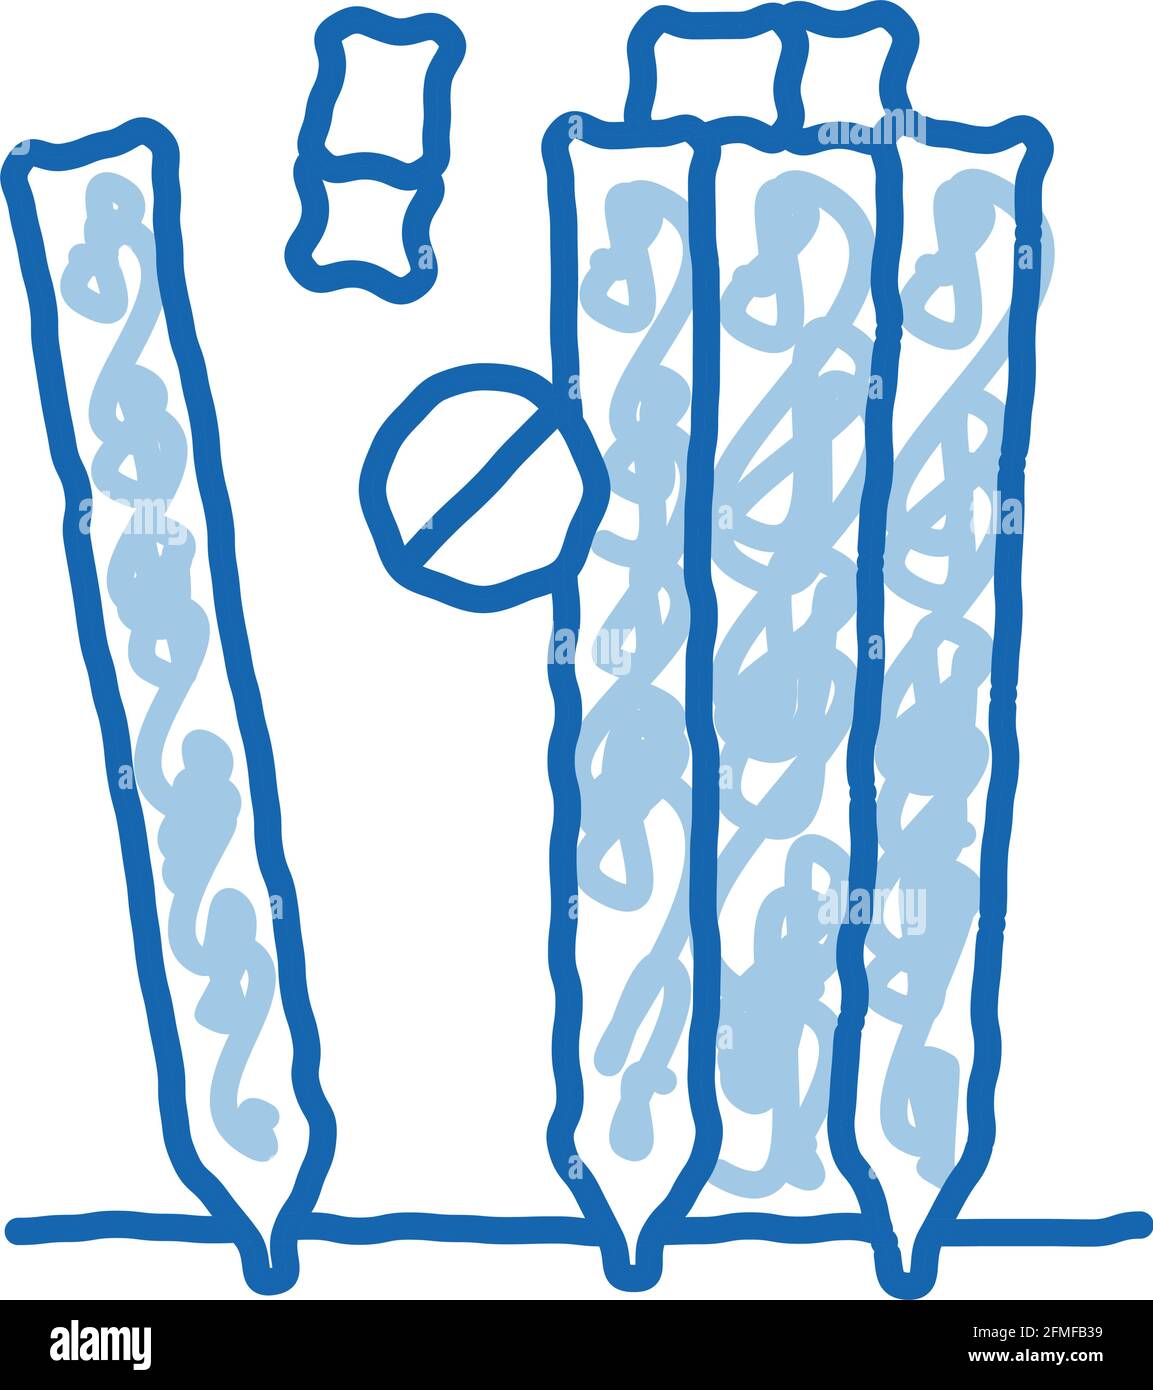 Cricket Equipment doodle icon hand drawn illustration Stock Vector